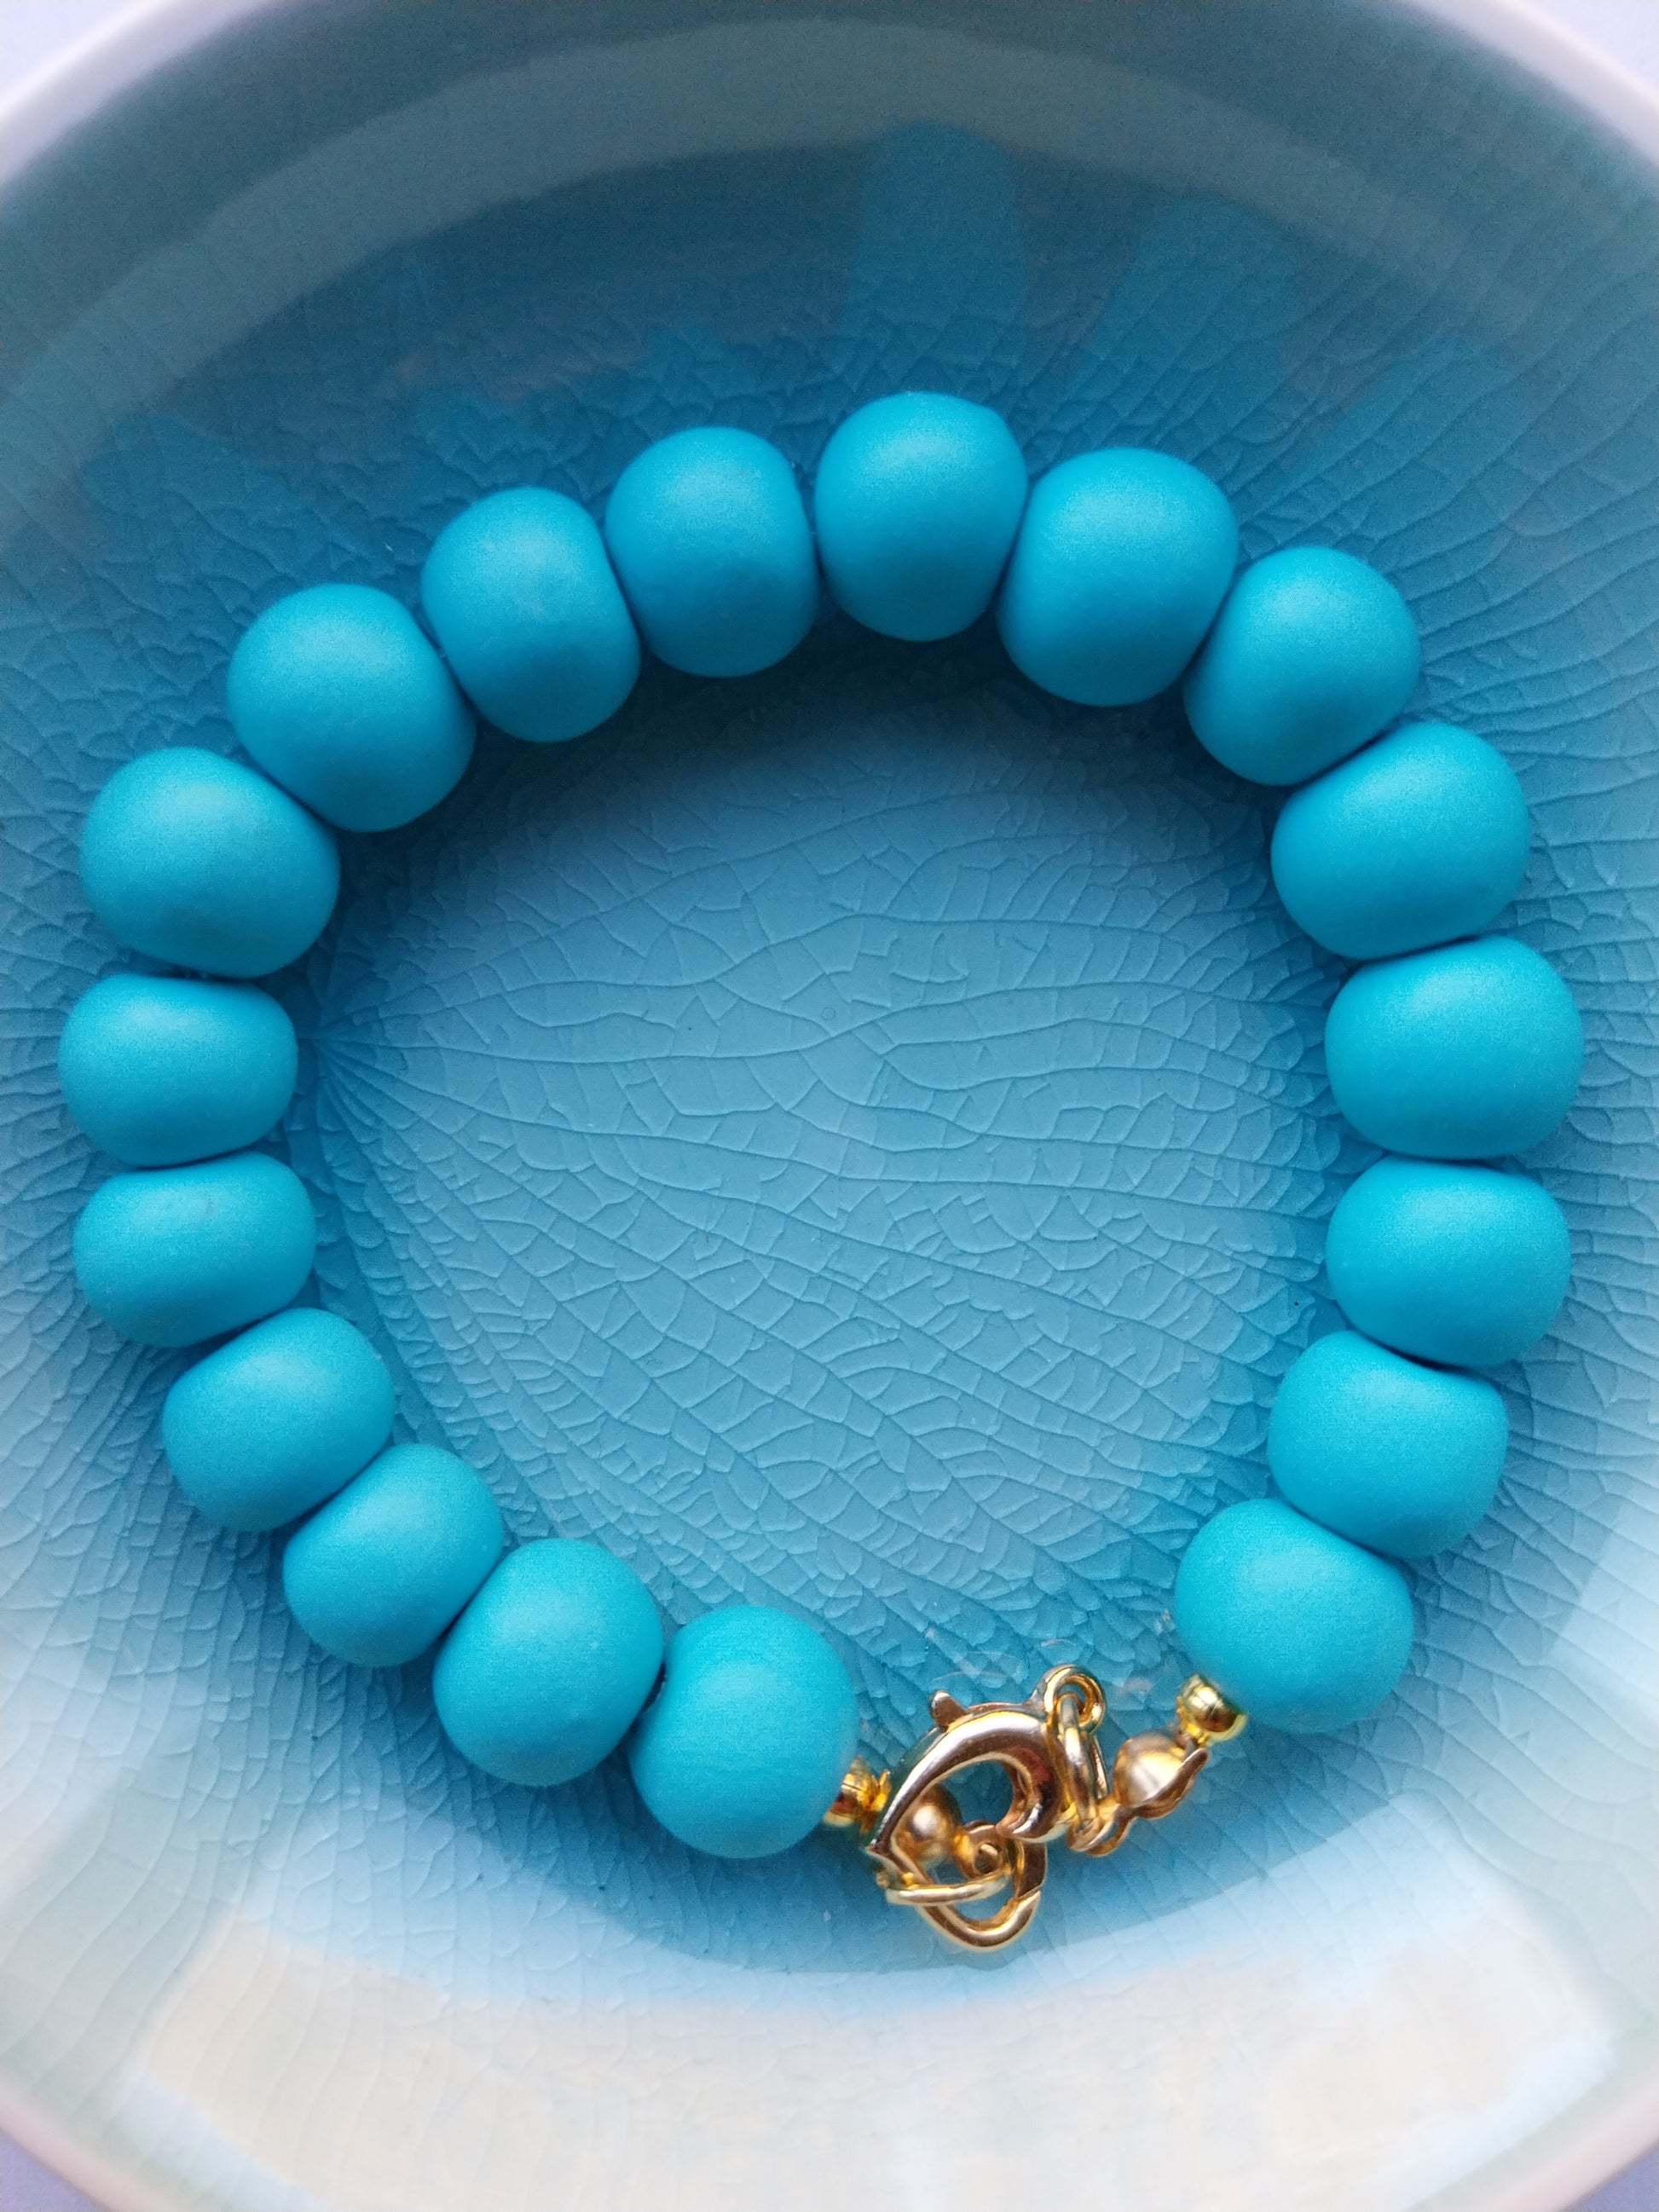 Clay bead bracelet in turquoise